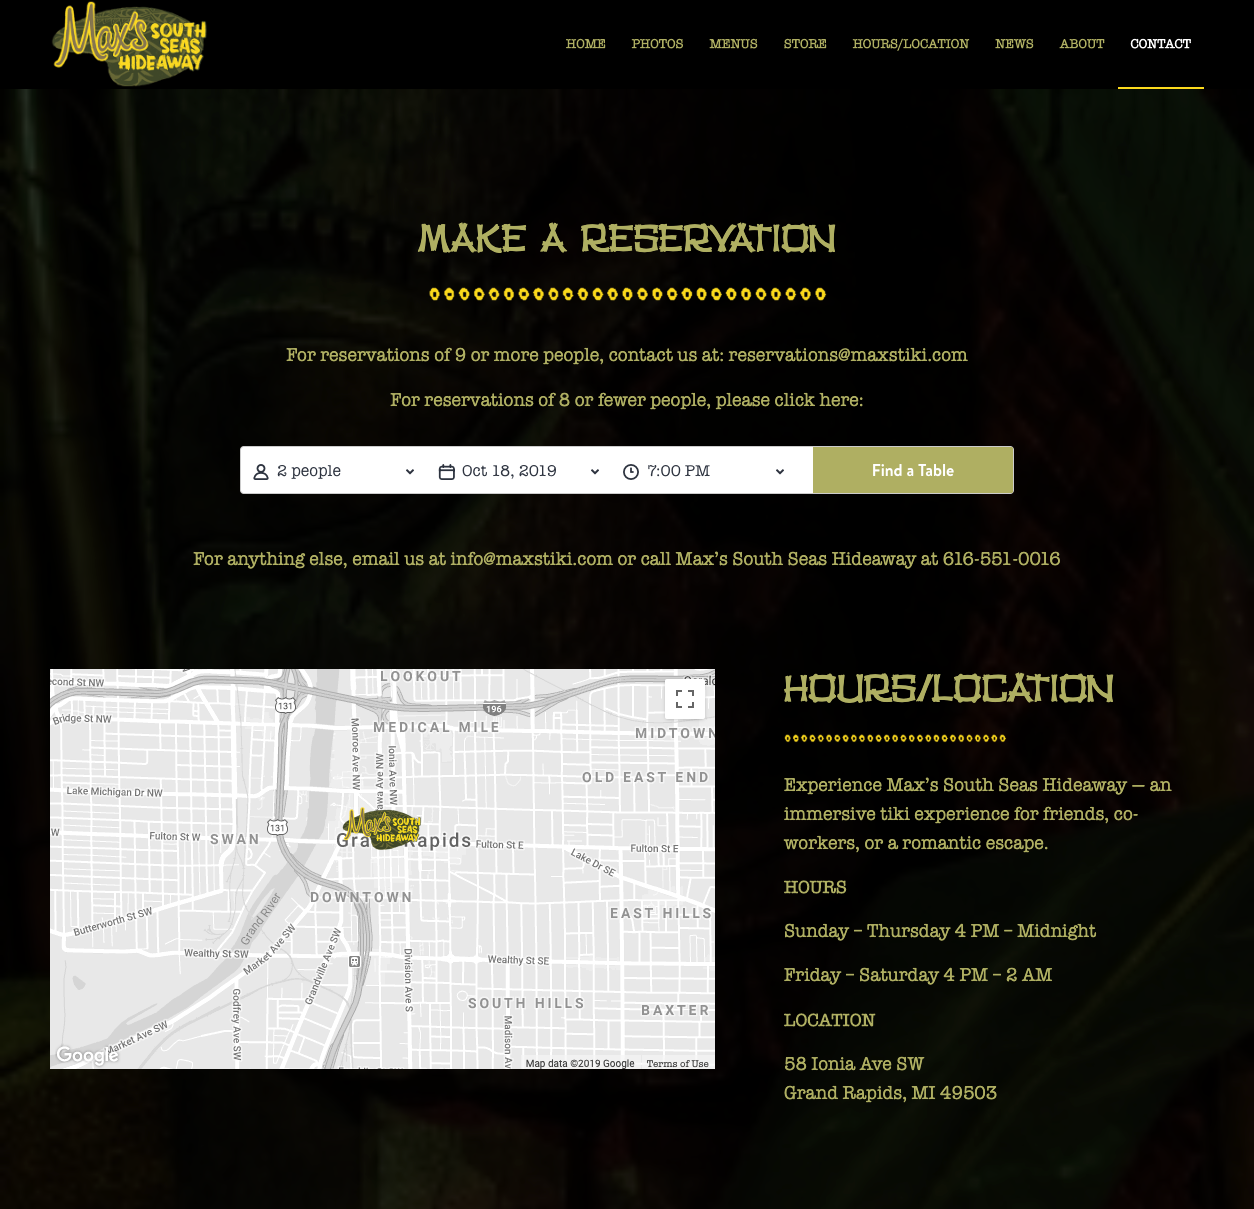 Grand Rapids Website Design and Development